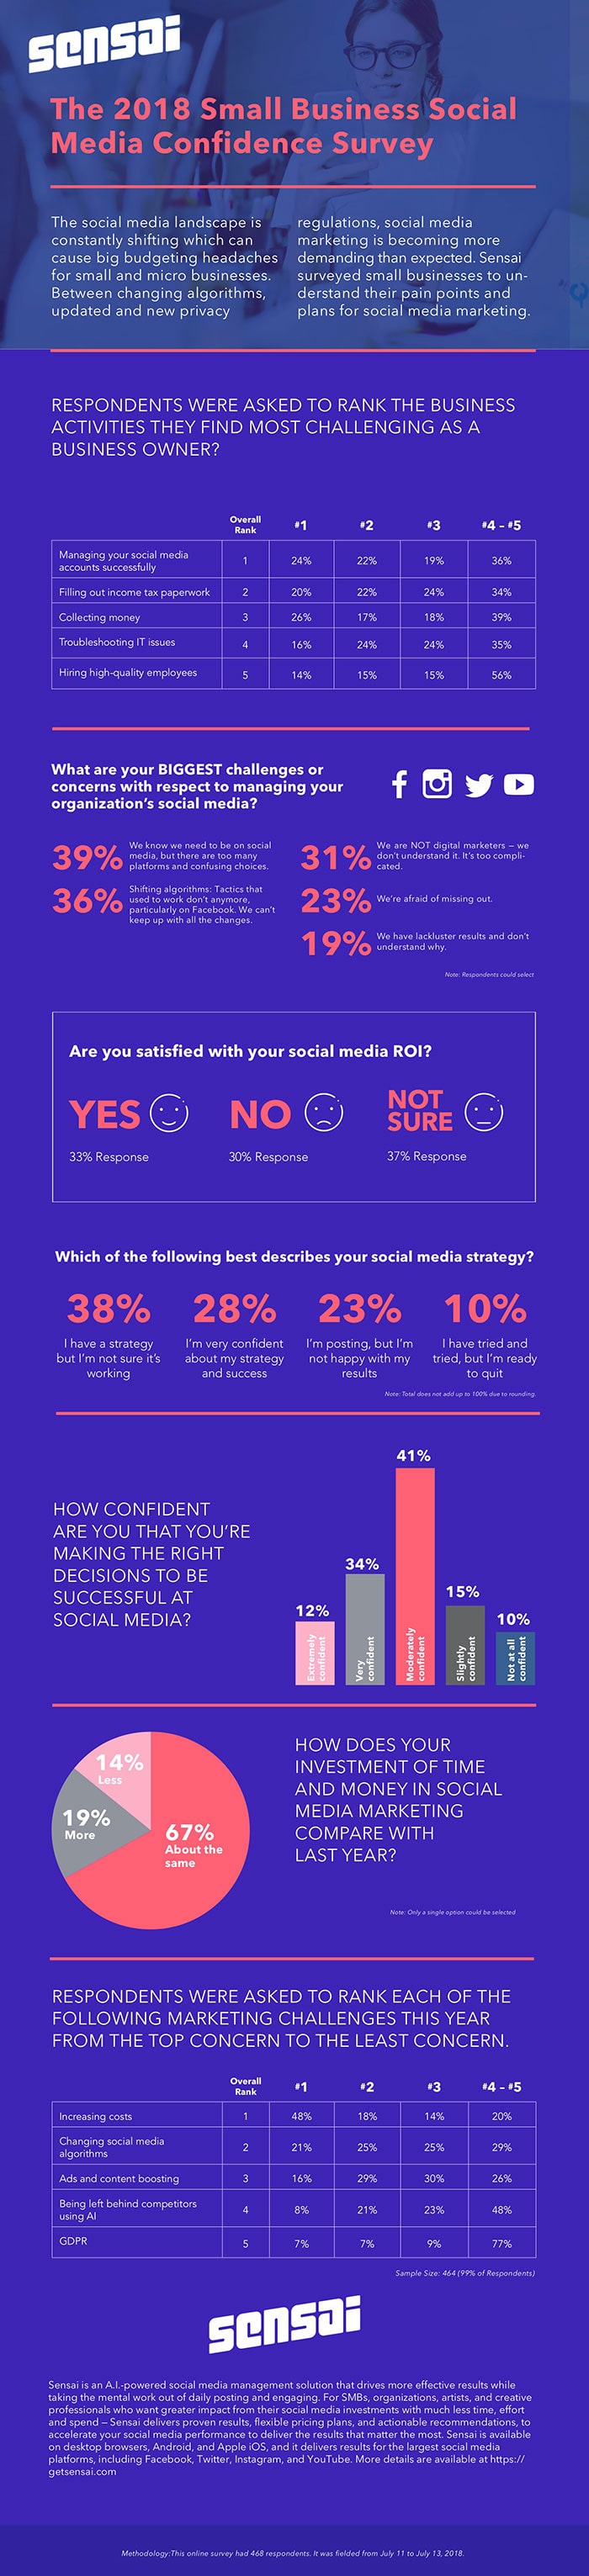 Sensai Small Business Social Media Marketing Confidence Survey